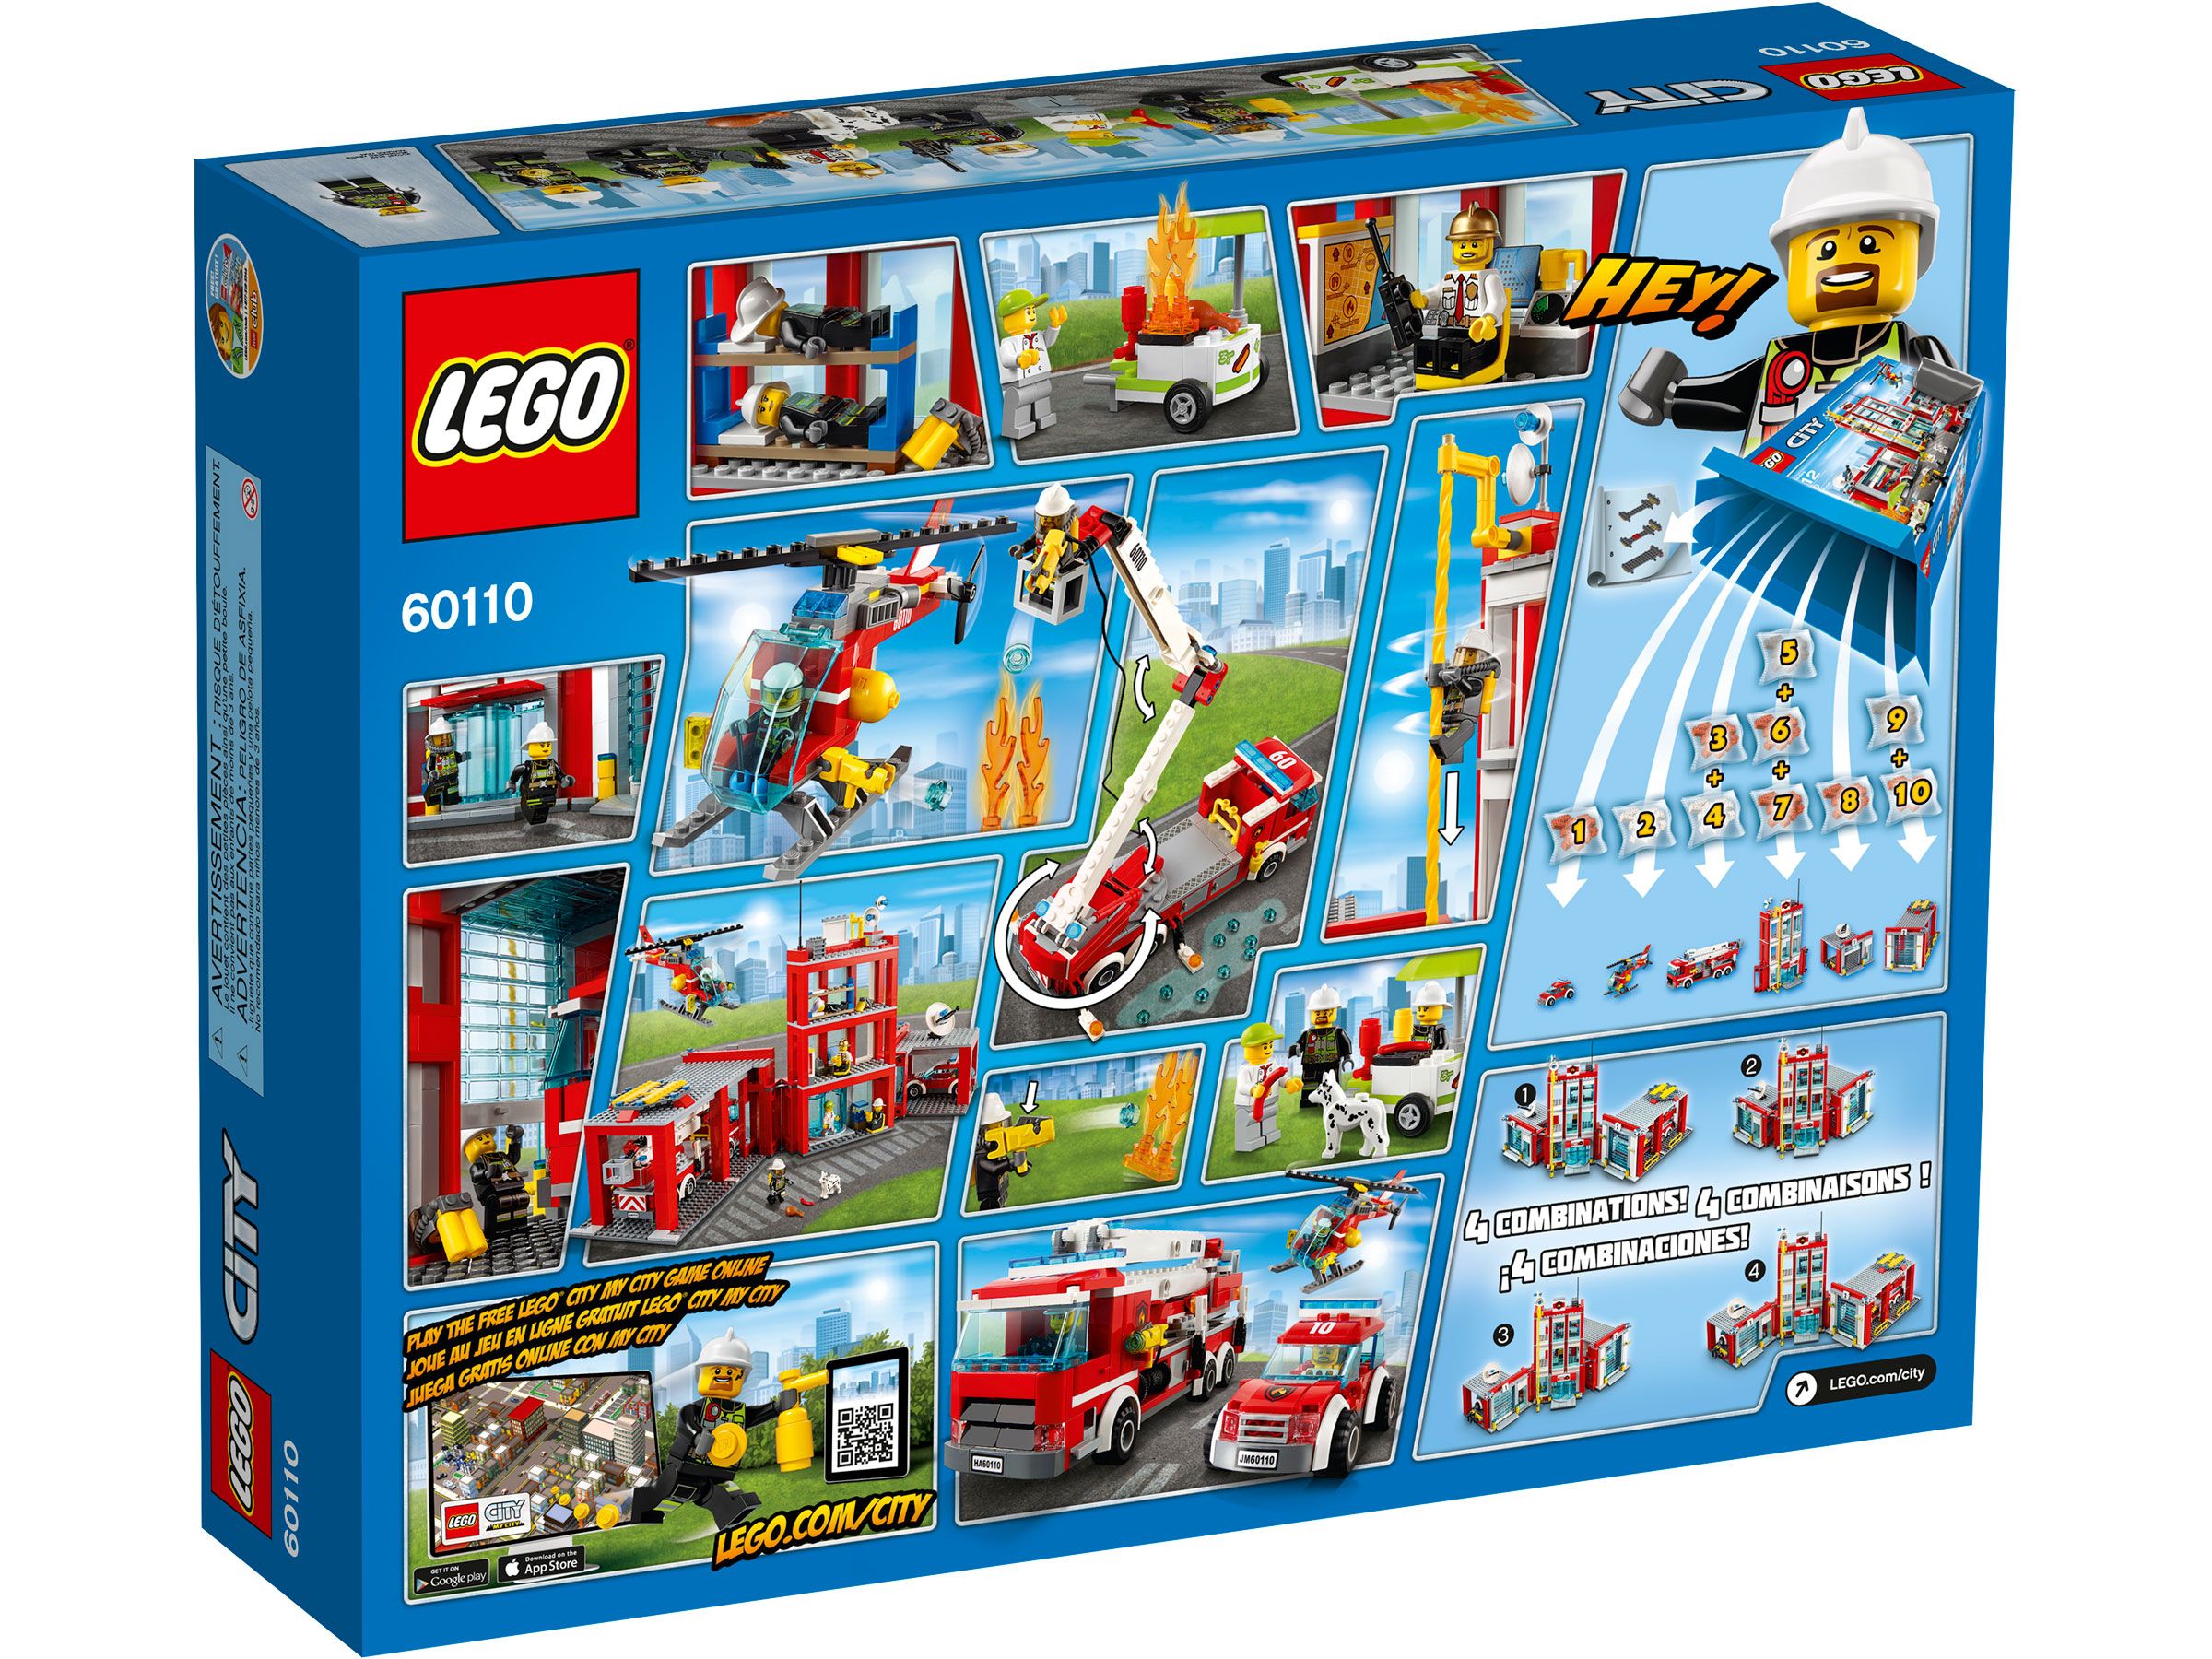 LEGO City 60110 Große Feuerwehrstation LEGO_60110_box5_na.jpg